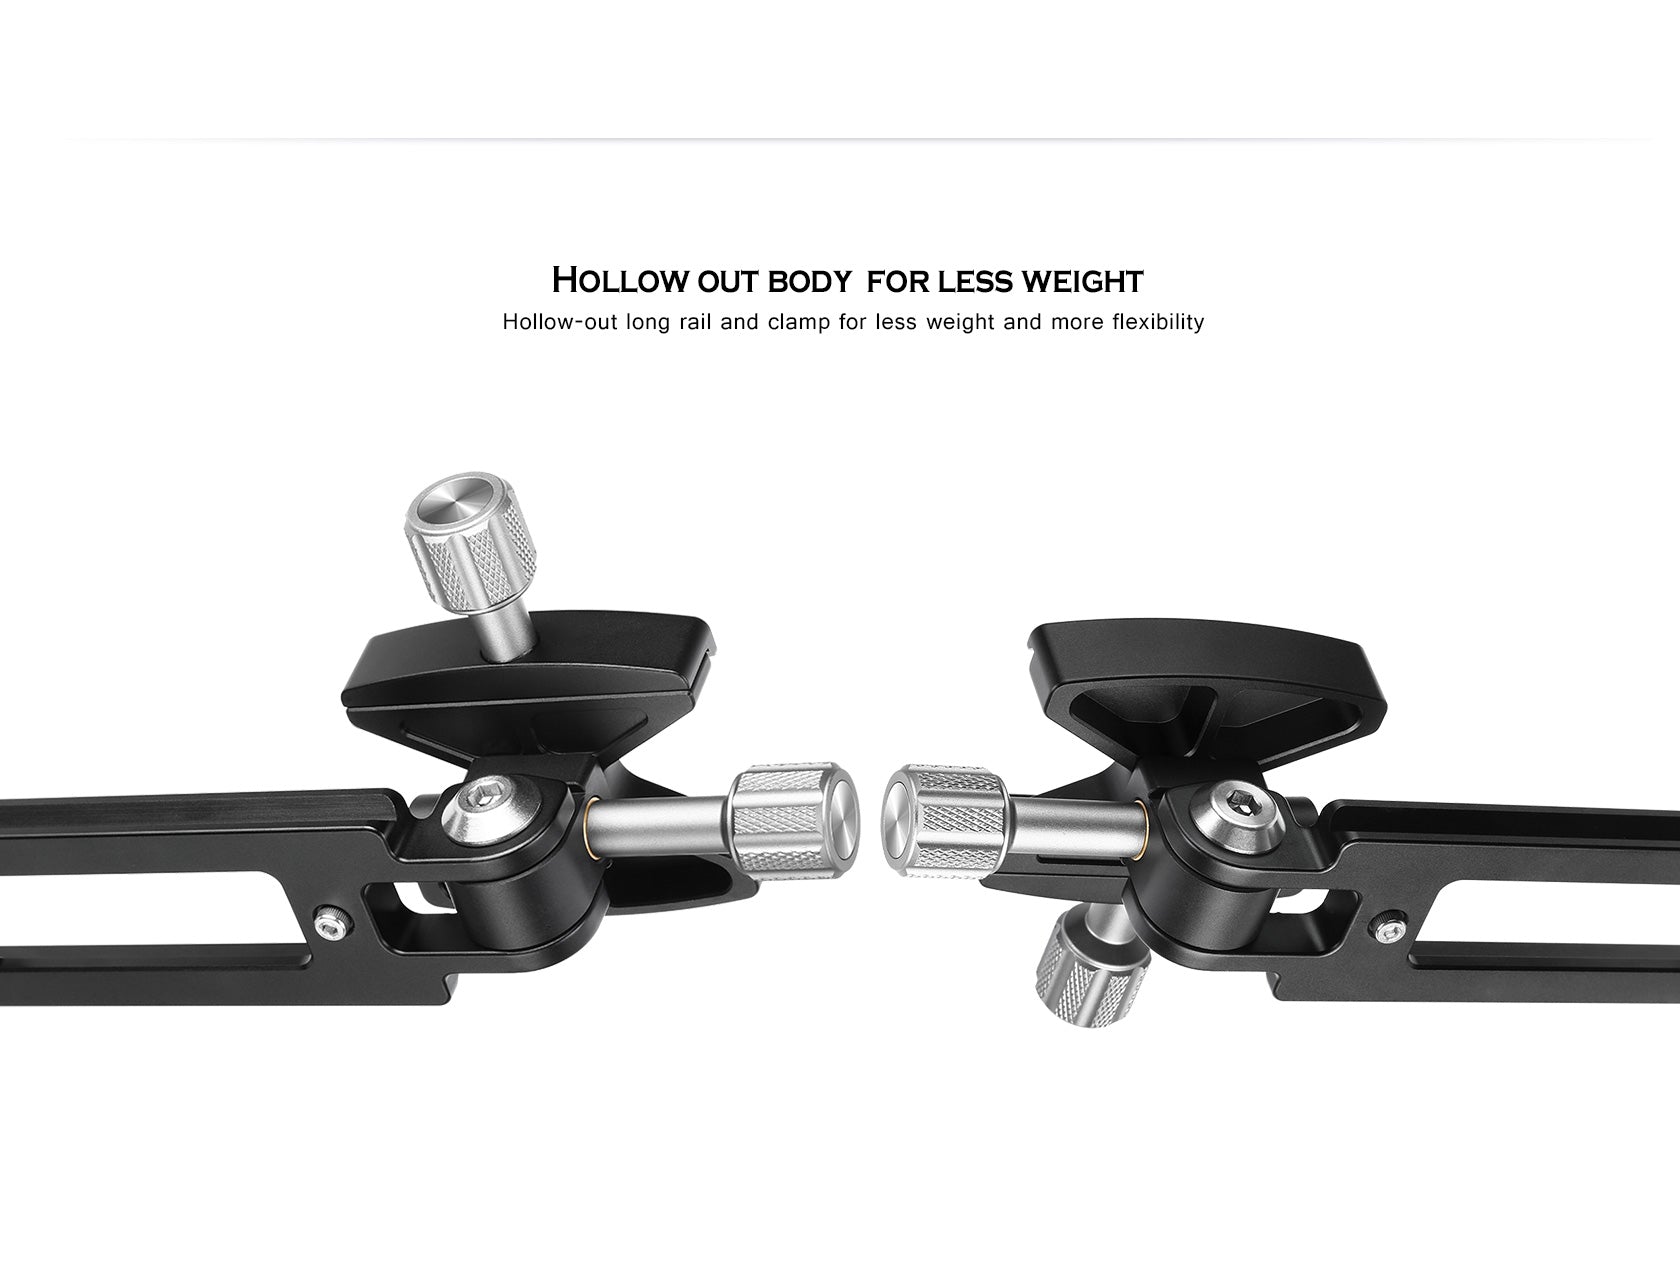 "Open Box" Leofoto VR-150 (Rail 171mm) Dual Pivot Long Tele Lens Support for Arca